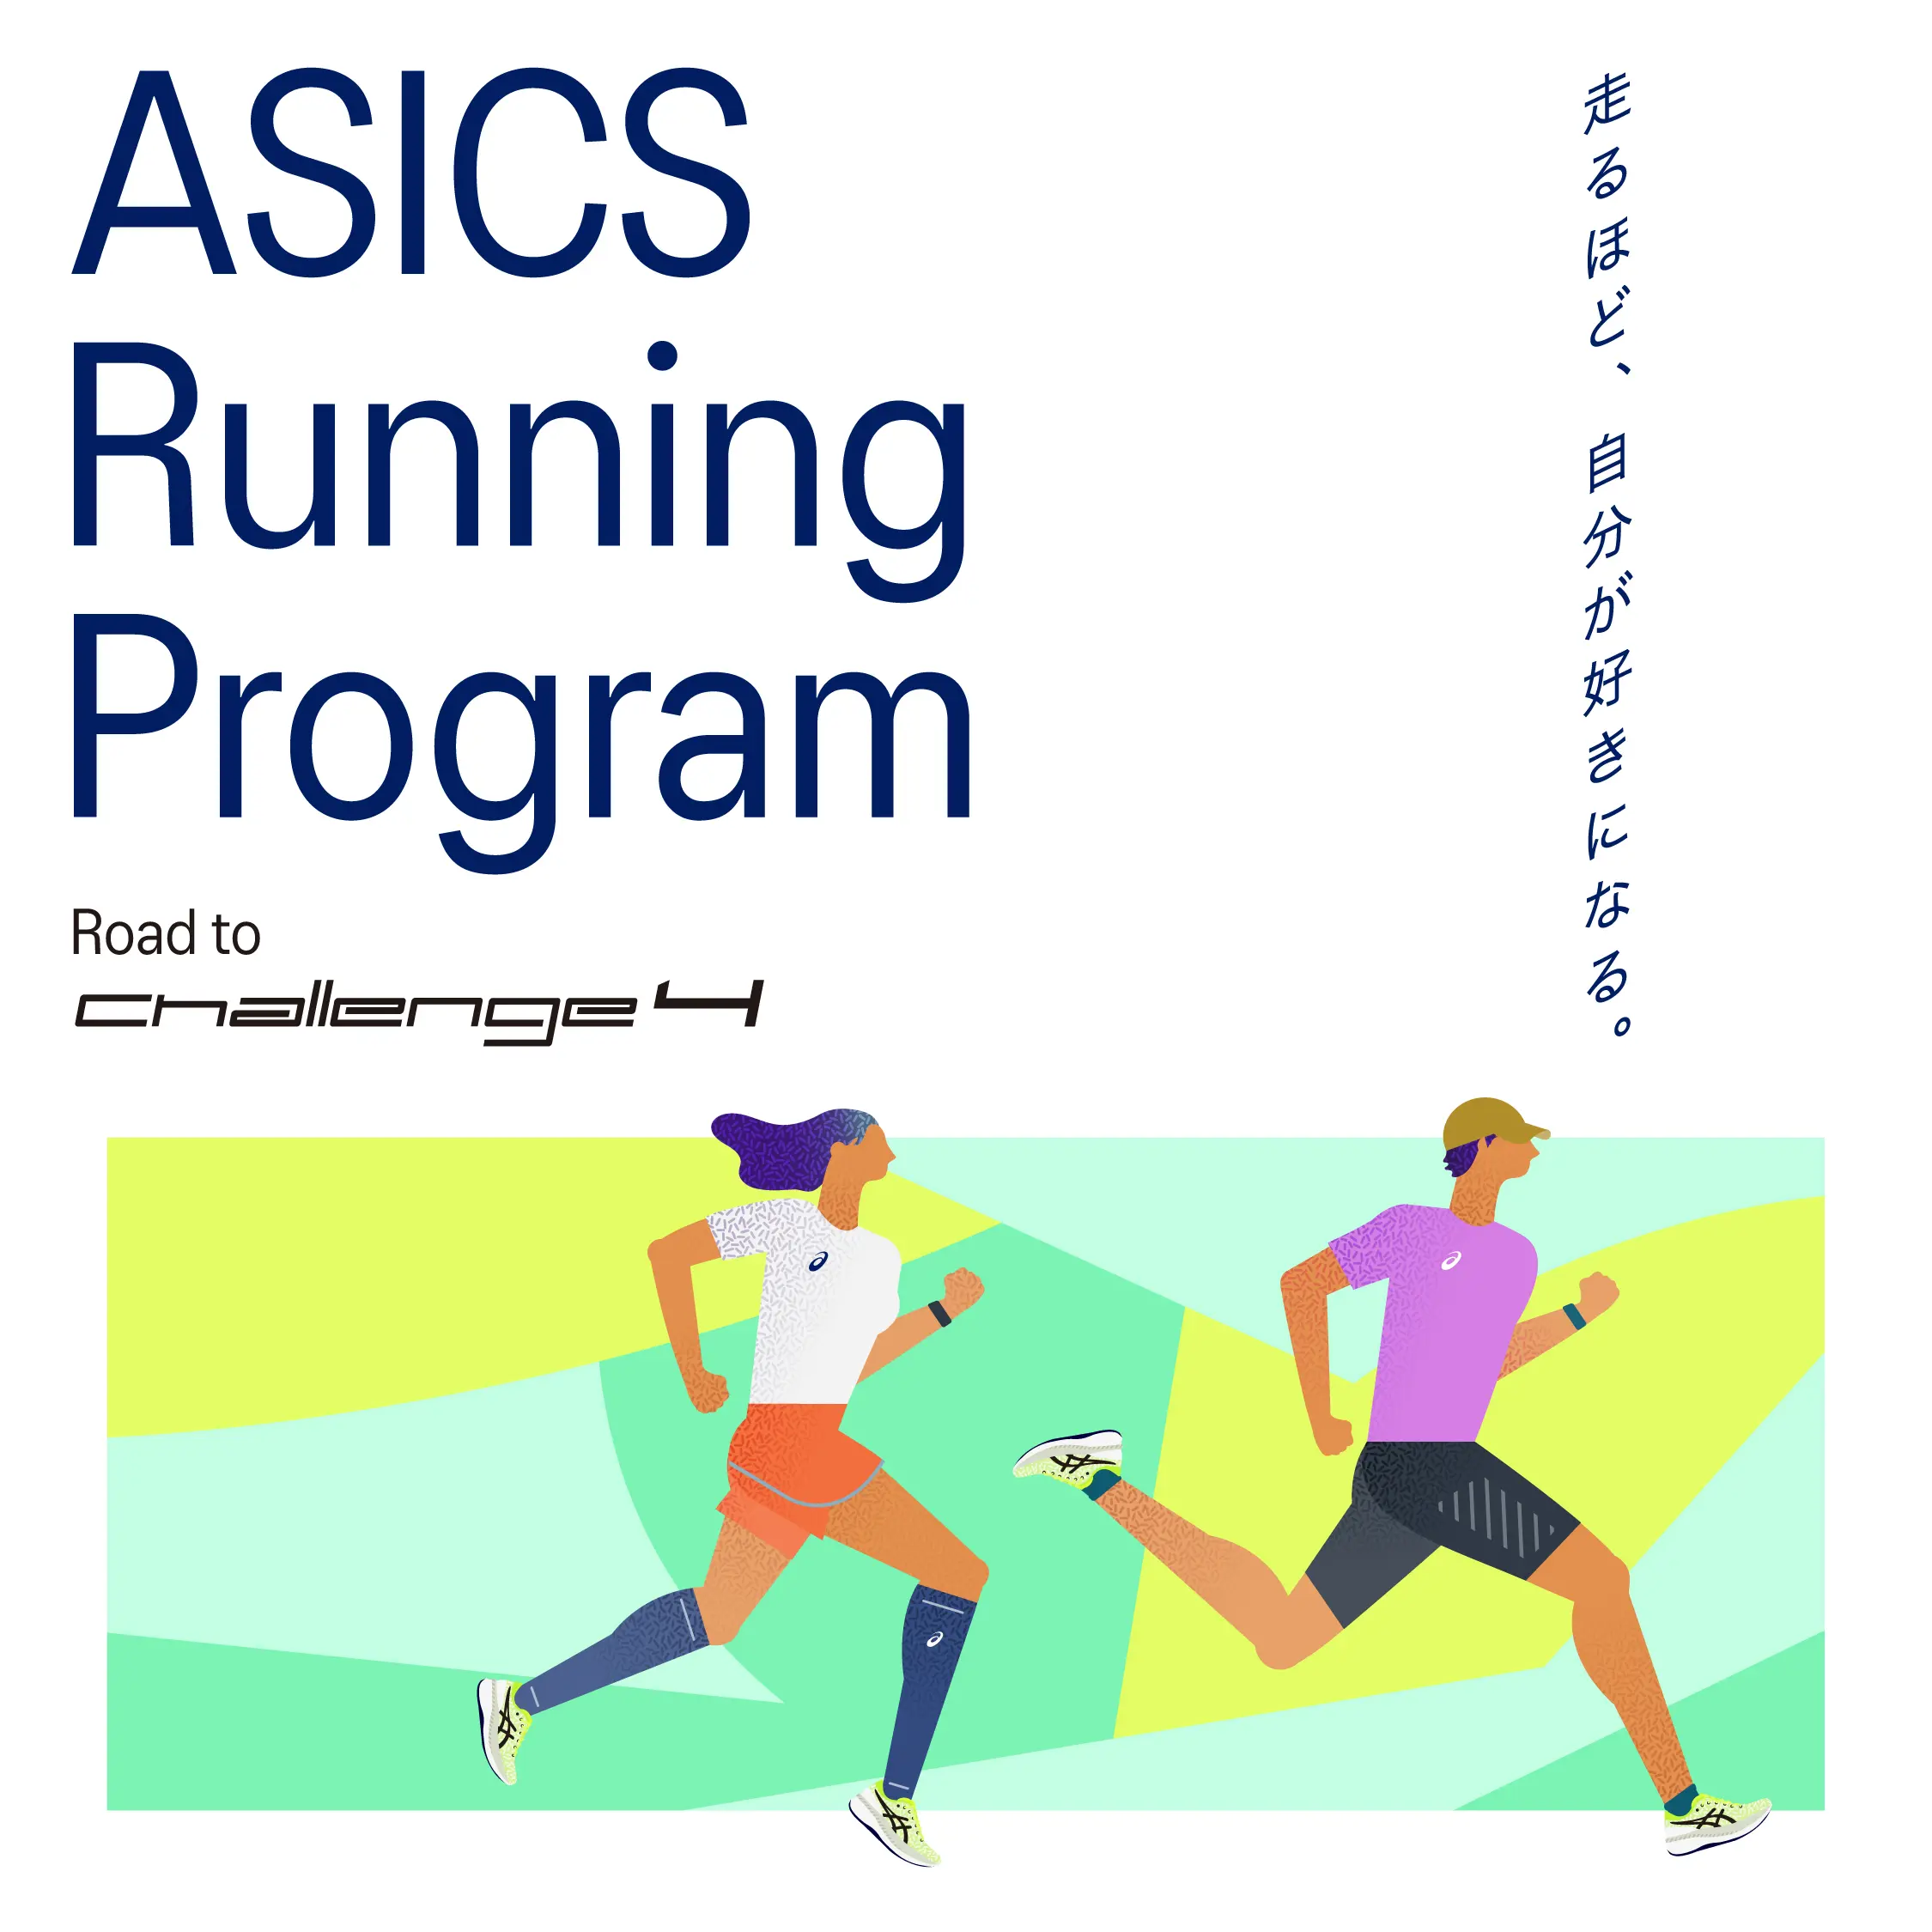 ASICS Running Program Road to Challenge 4